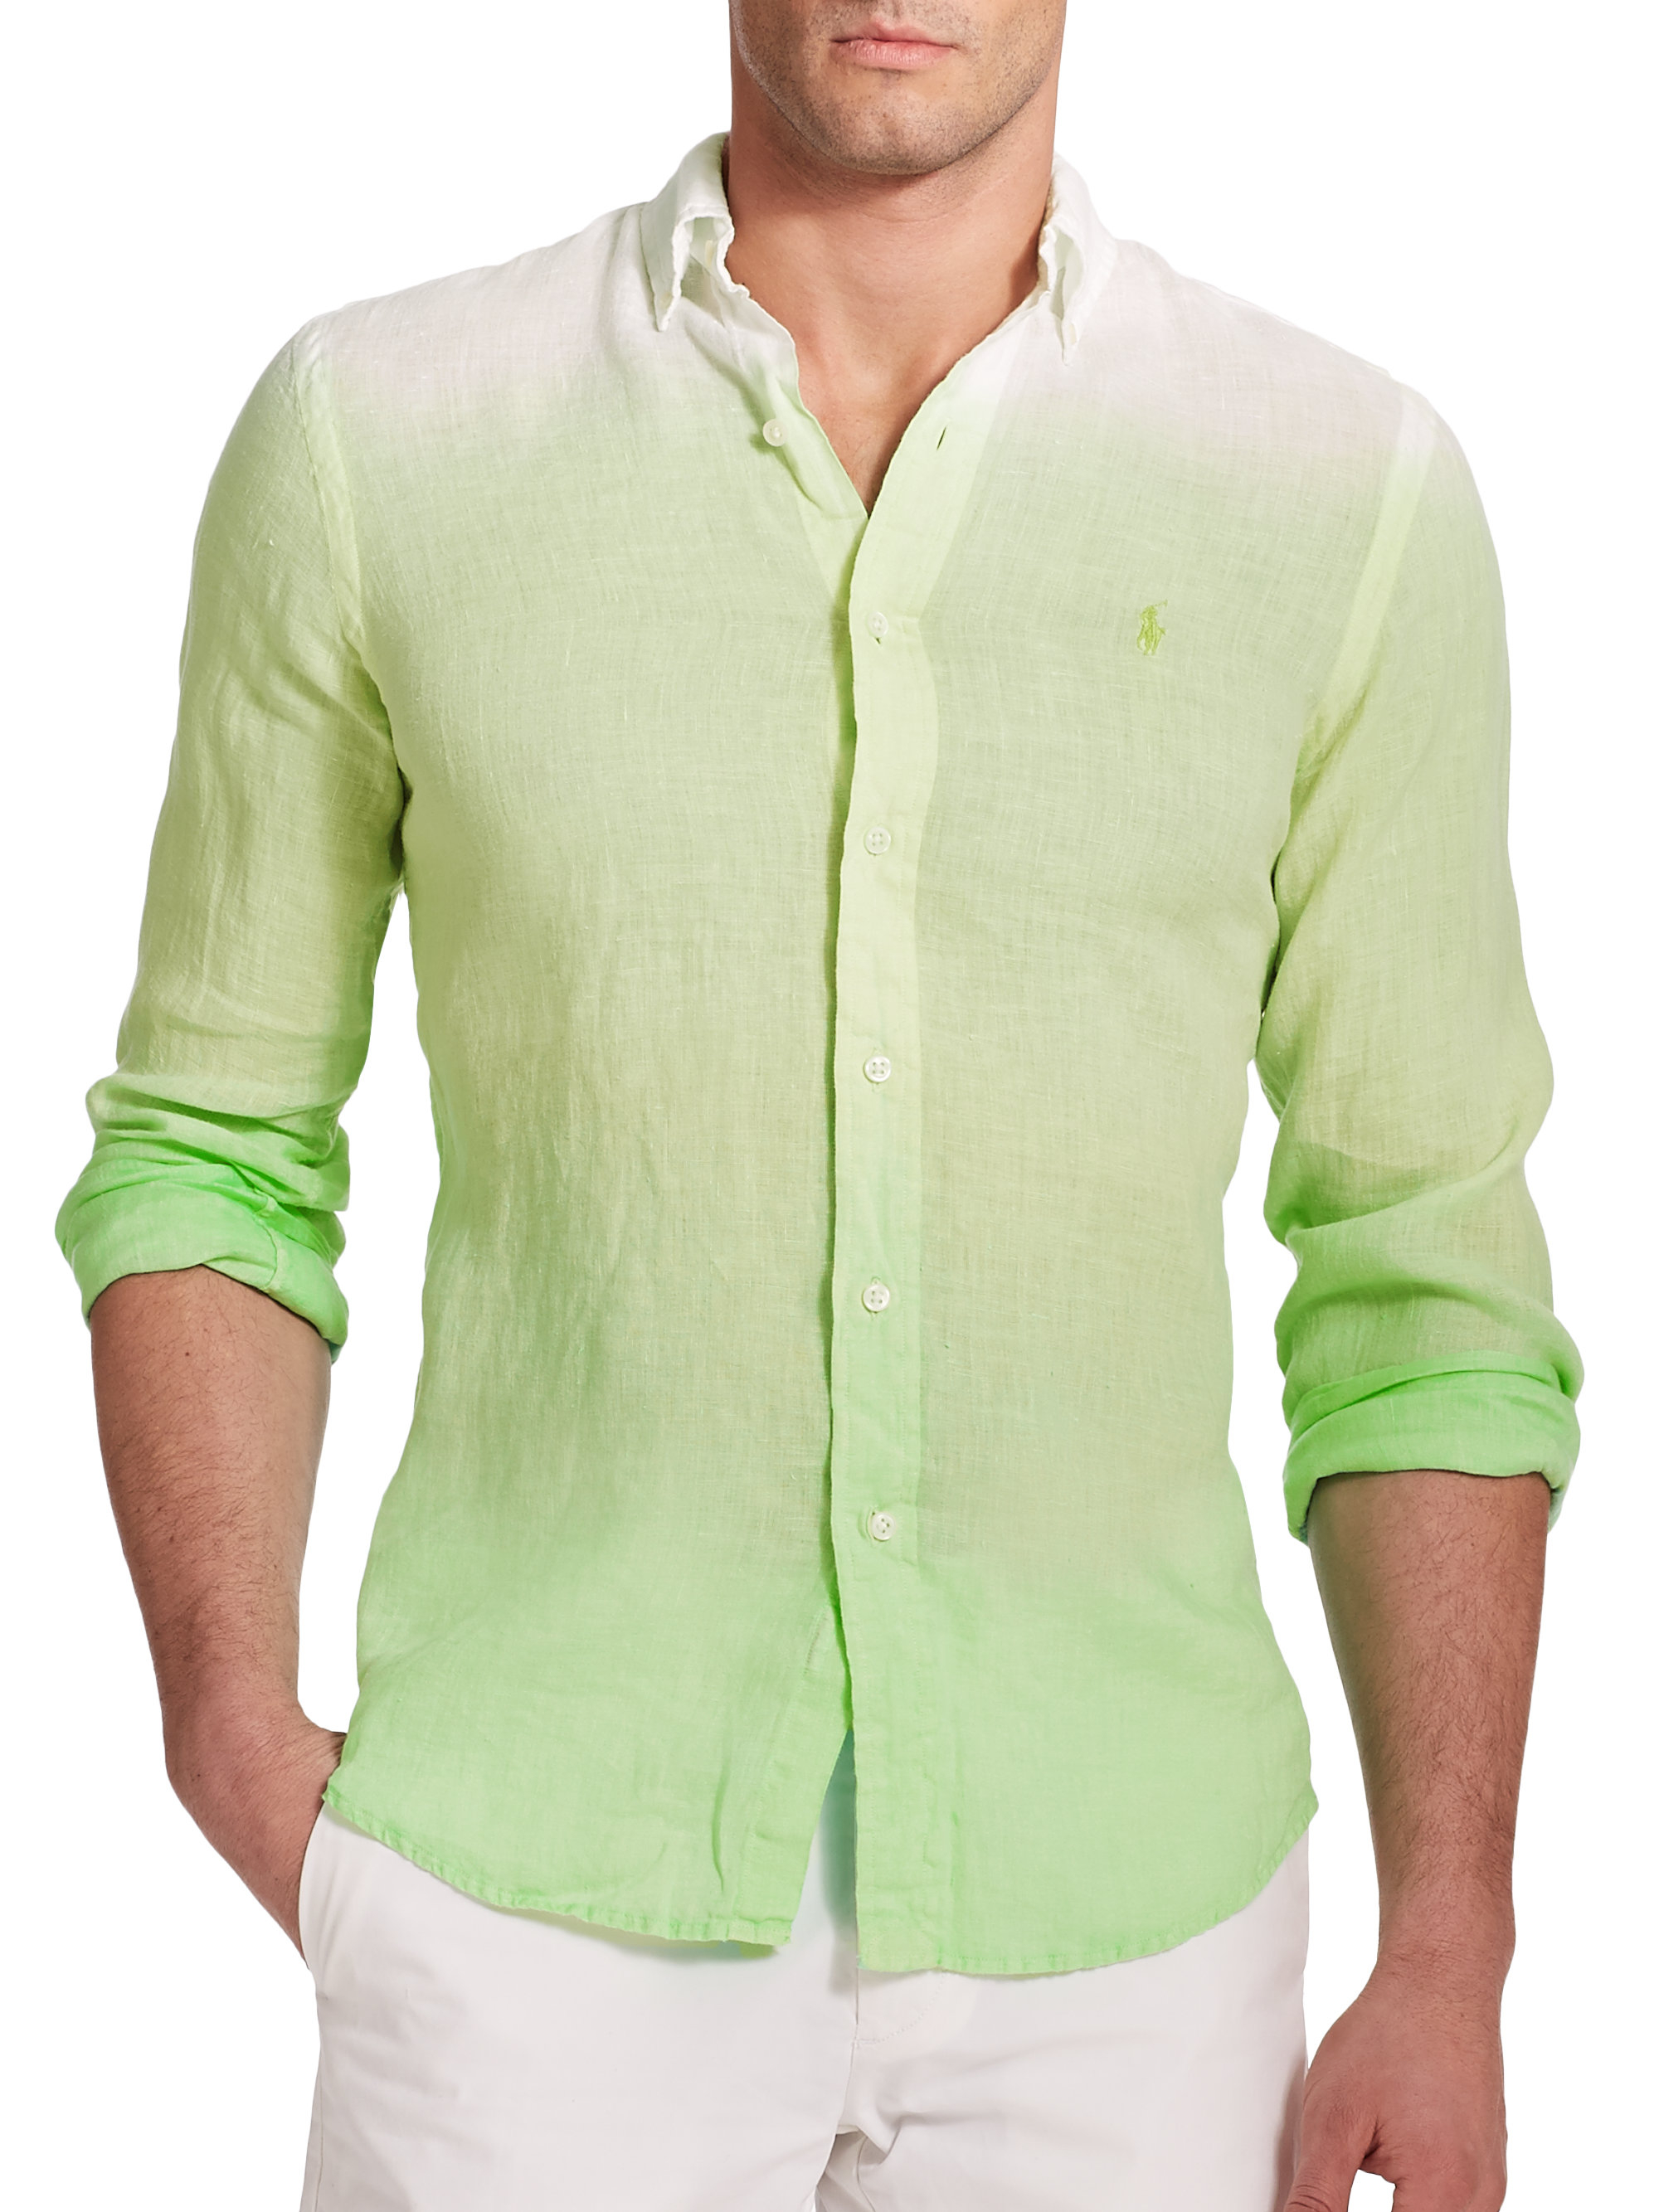 Polo Ralph Lauren Dip-Dyed Linen Sportshirt in Lime (Green) for Men - Lyst